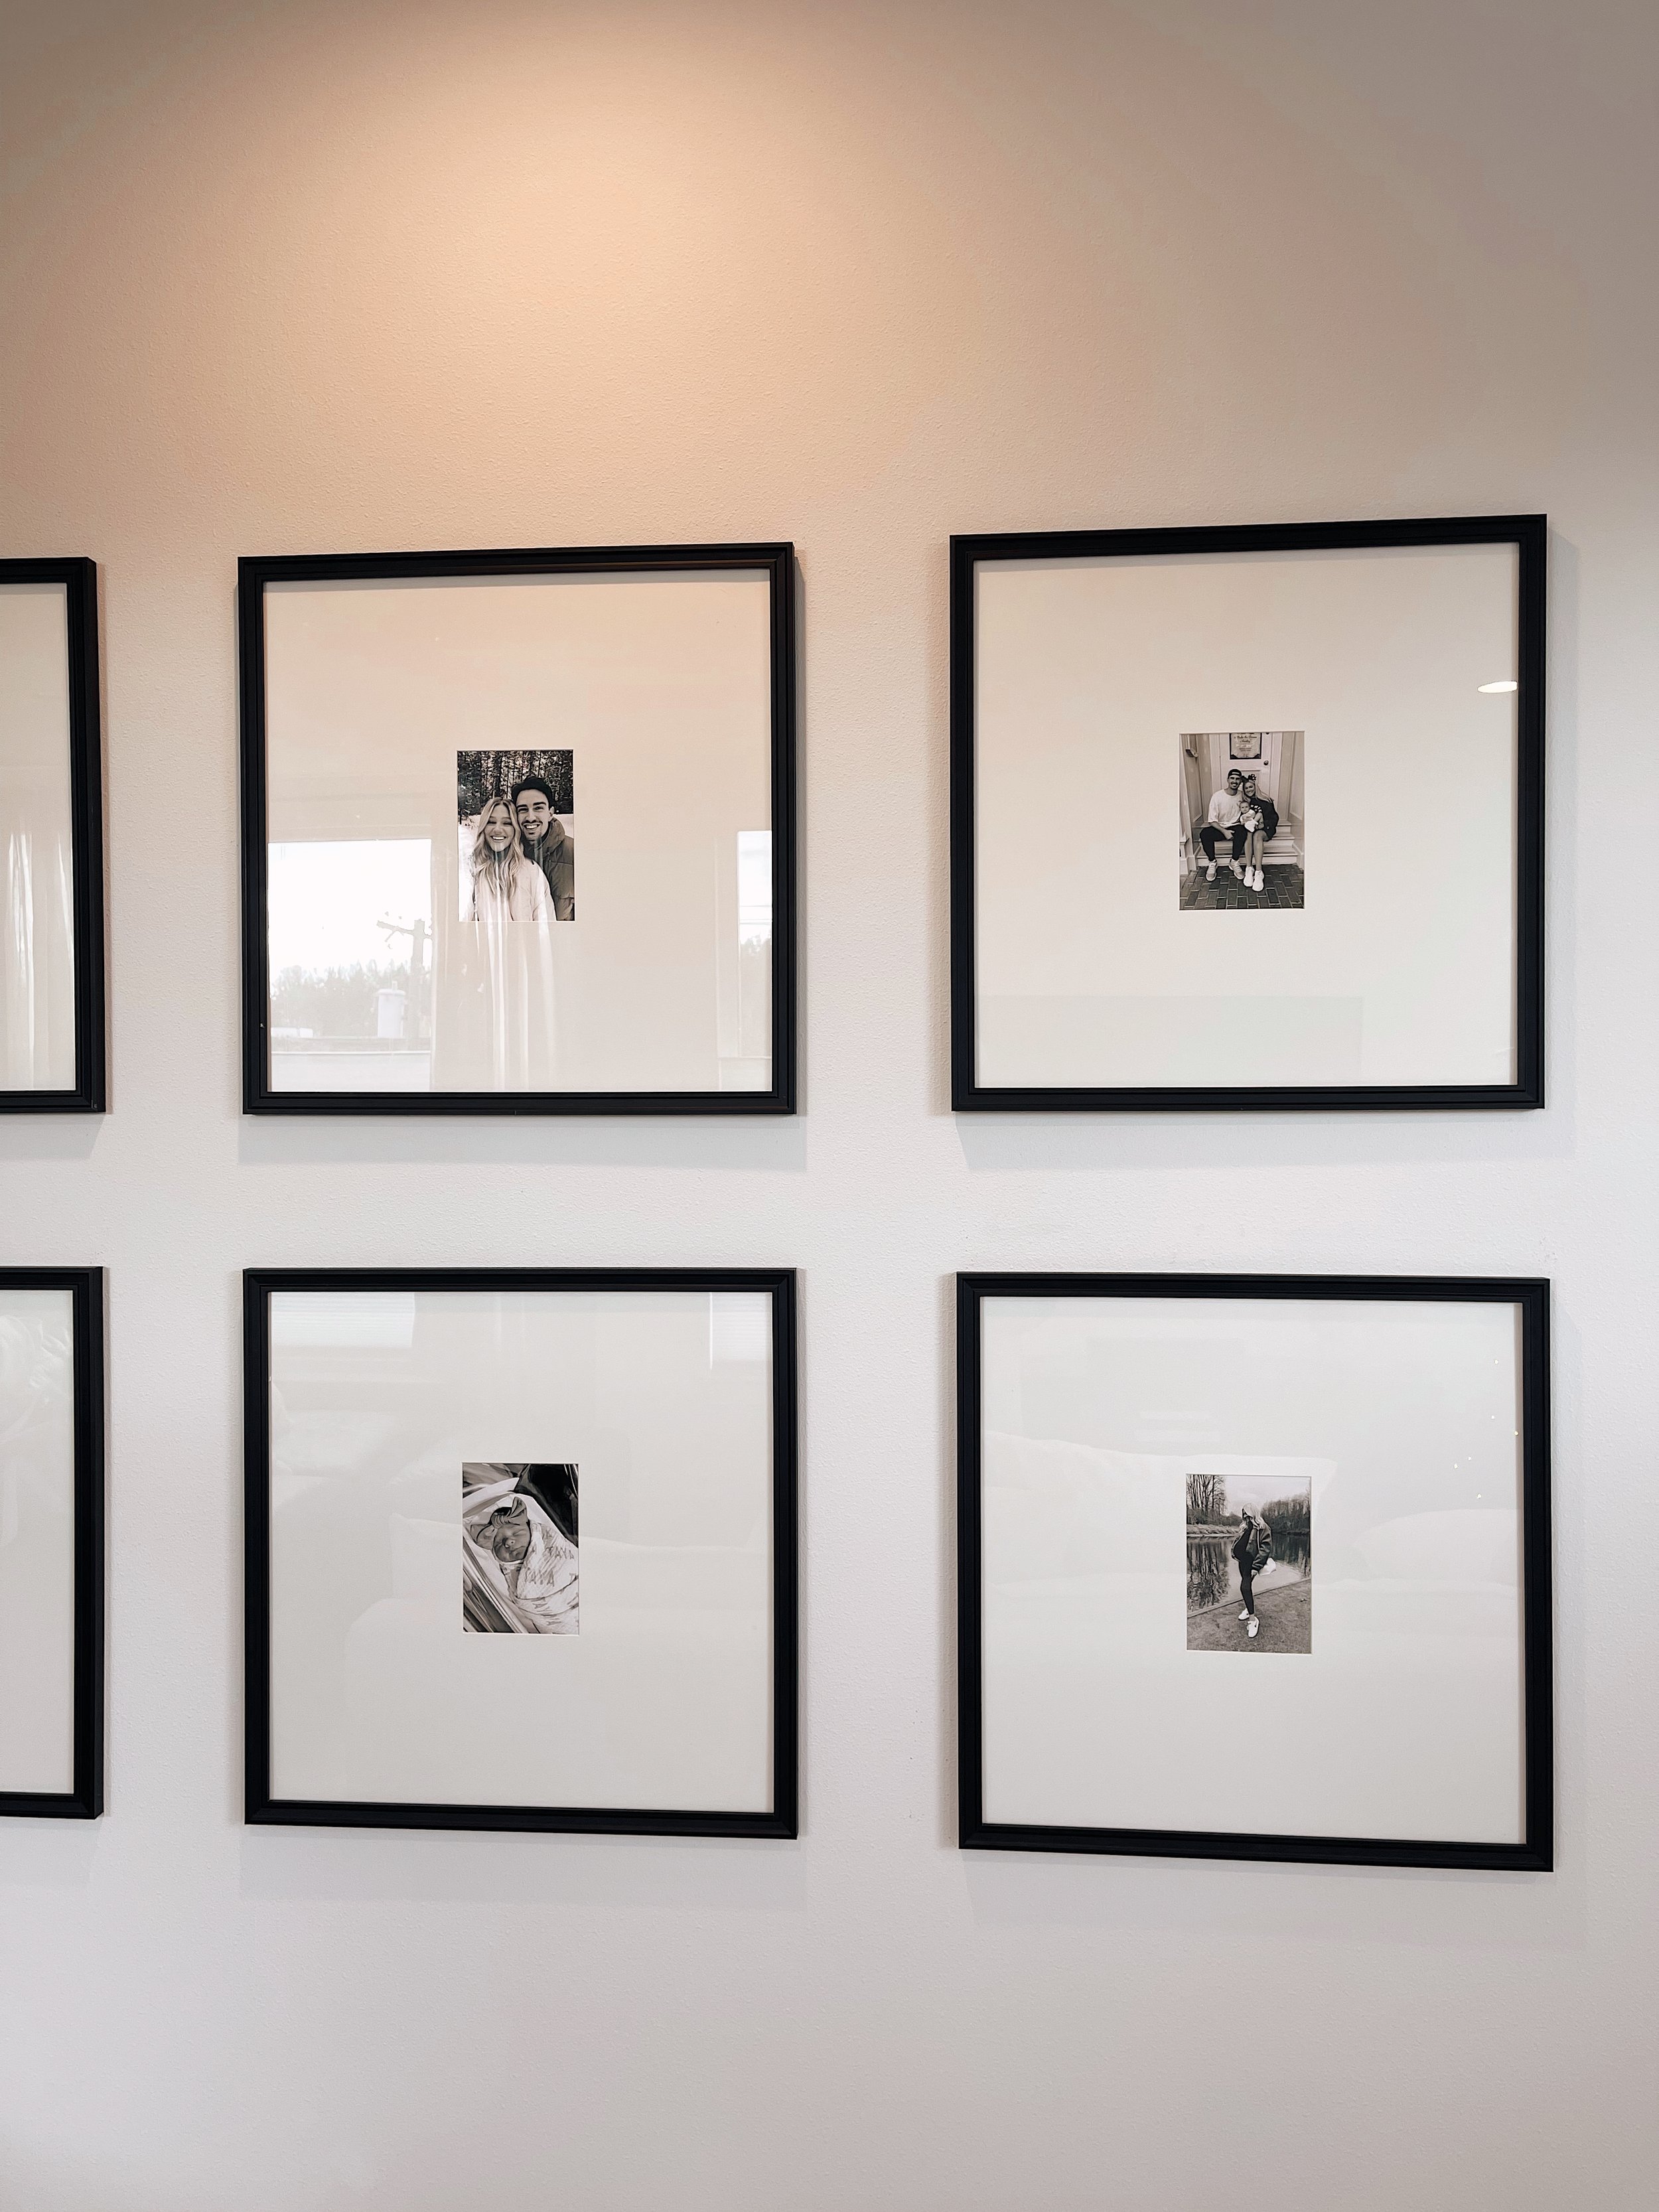 Bre Sheppard Living Room Reveal - Gallery Wall - bresheppard.com.JPG